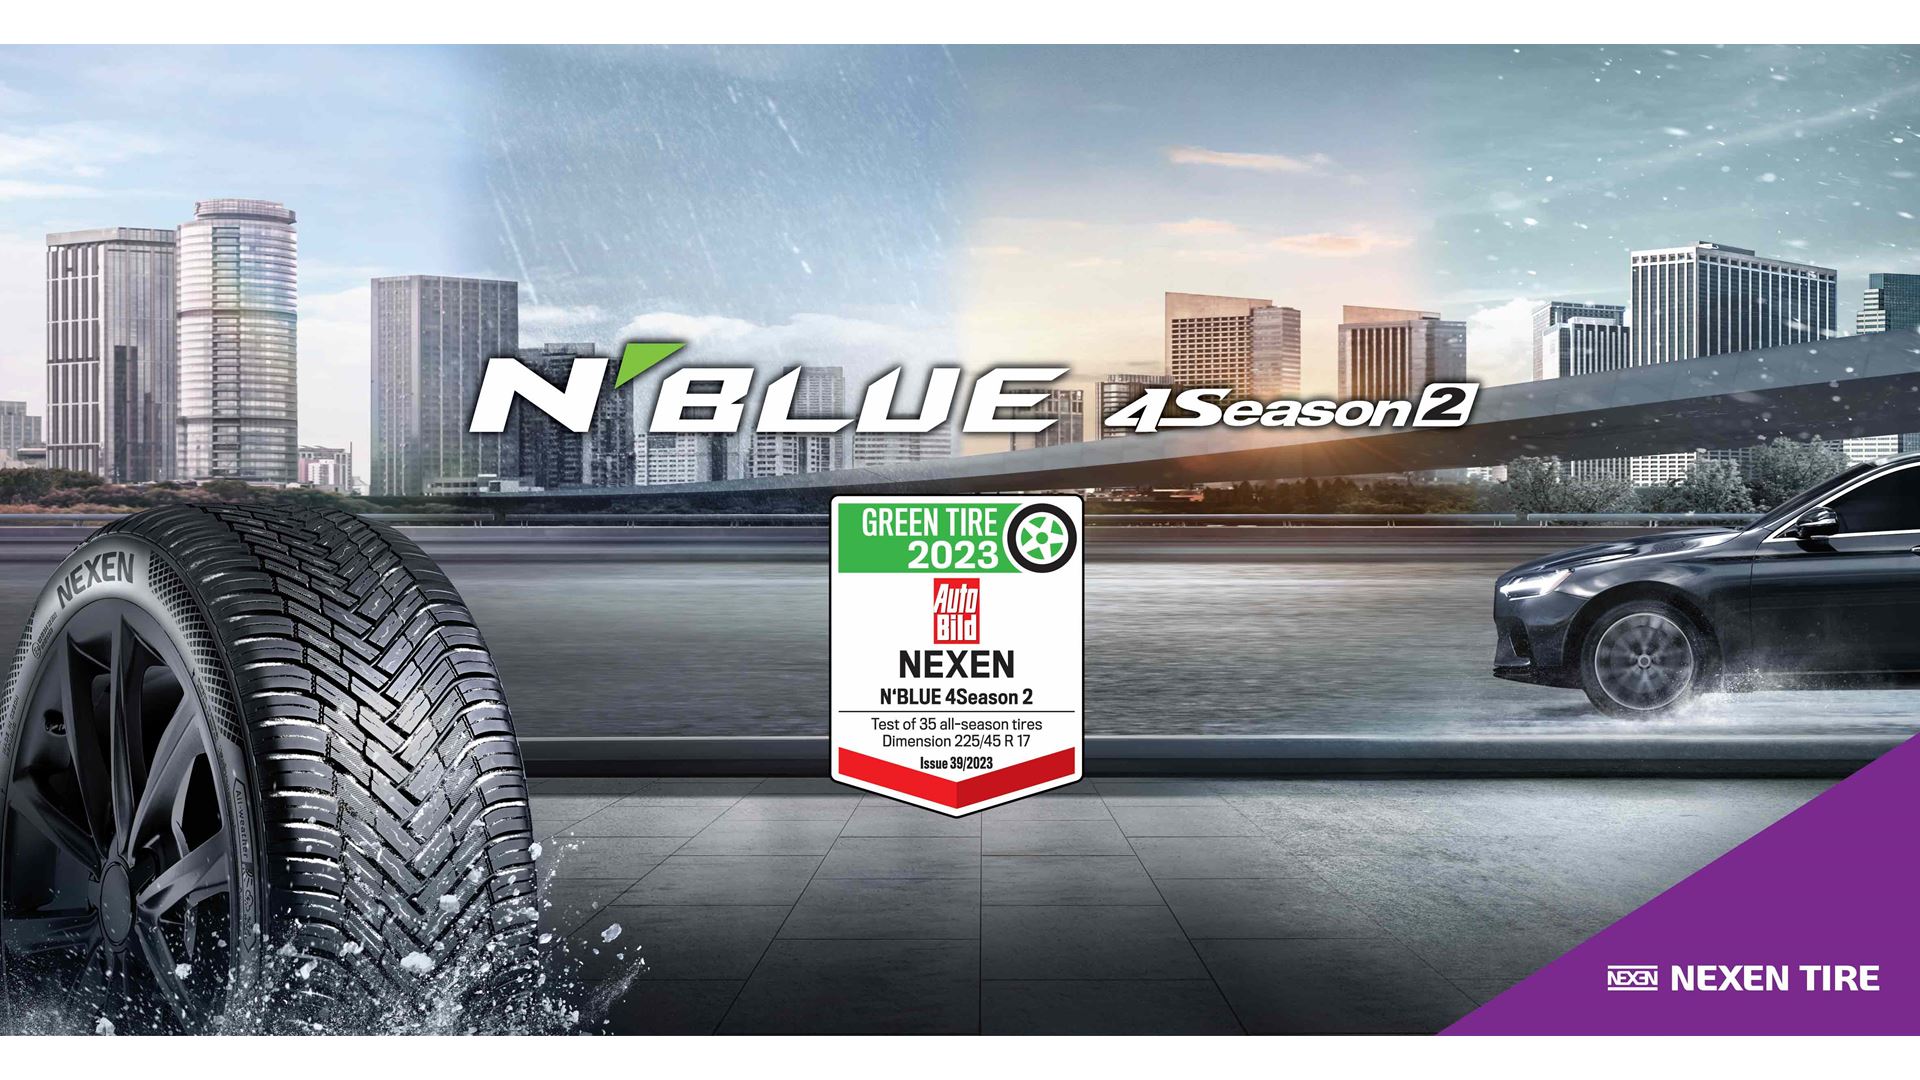 NEXEN TIRE N blue 4 Season 2 tires earn Green Tire seal by German magazine Auto Bild